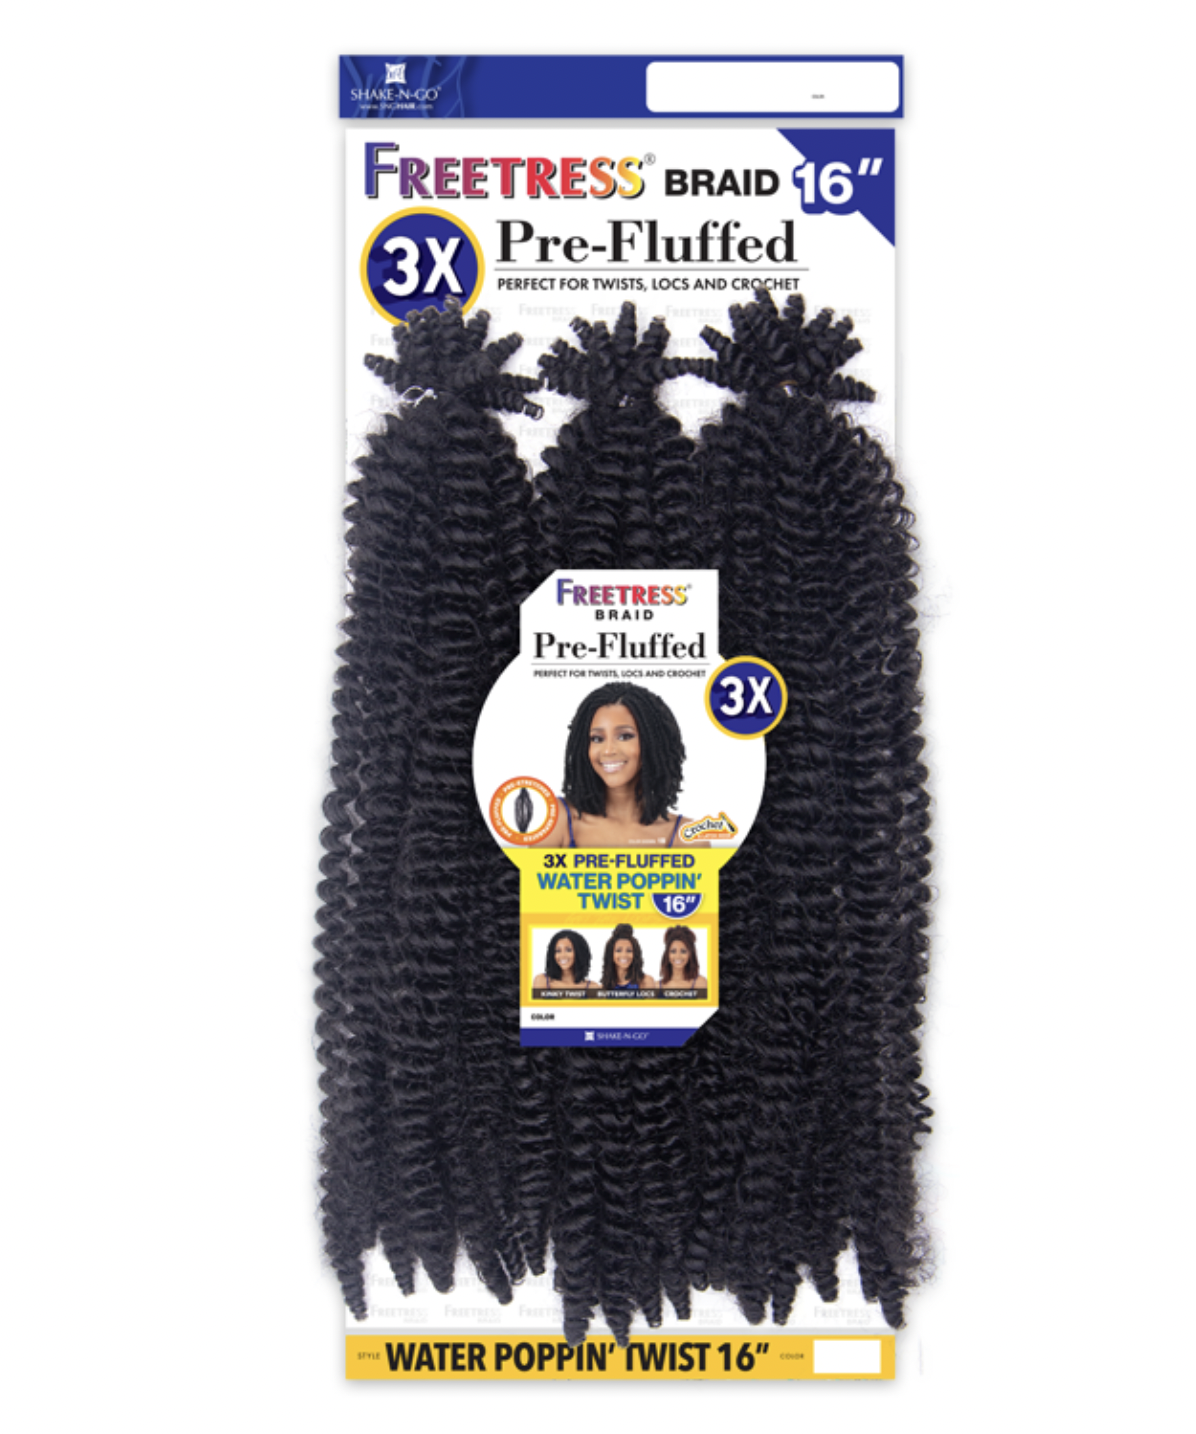 Shake N Go FreeTress Crochet Braids Butterfly Loc 12 – BPolished Beauty  Supply